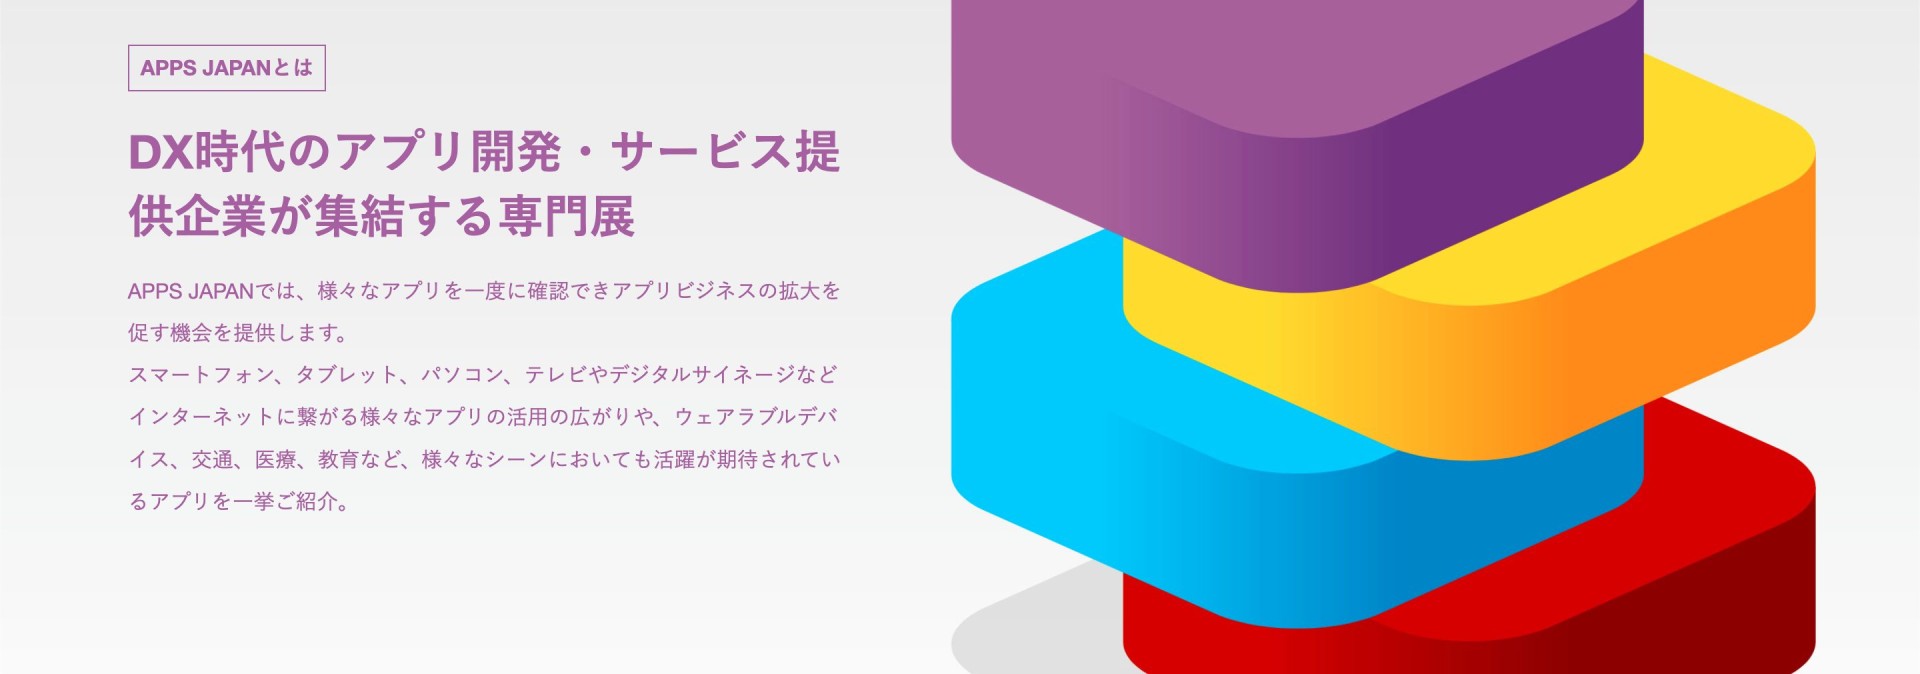 【6/15~6/17】APPS JAPAN 2022 / INTEROP TOKYO カンファレンス 2022 に出展します